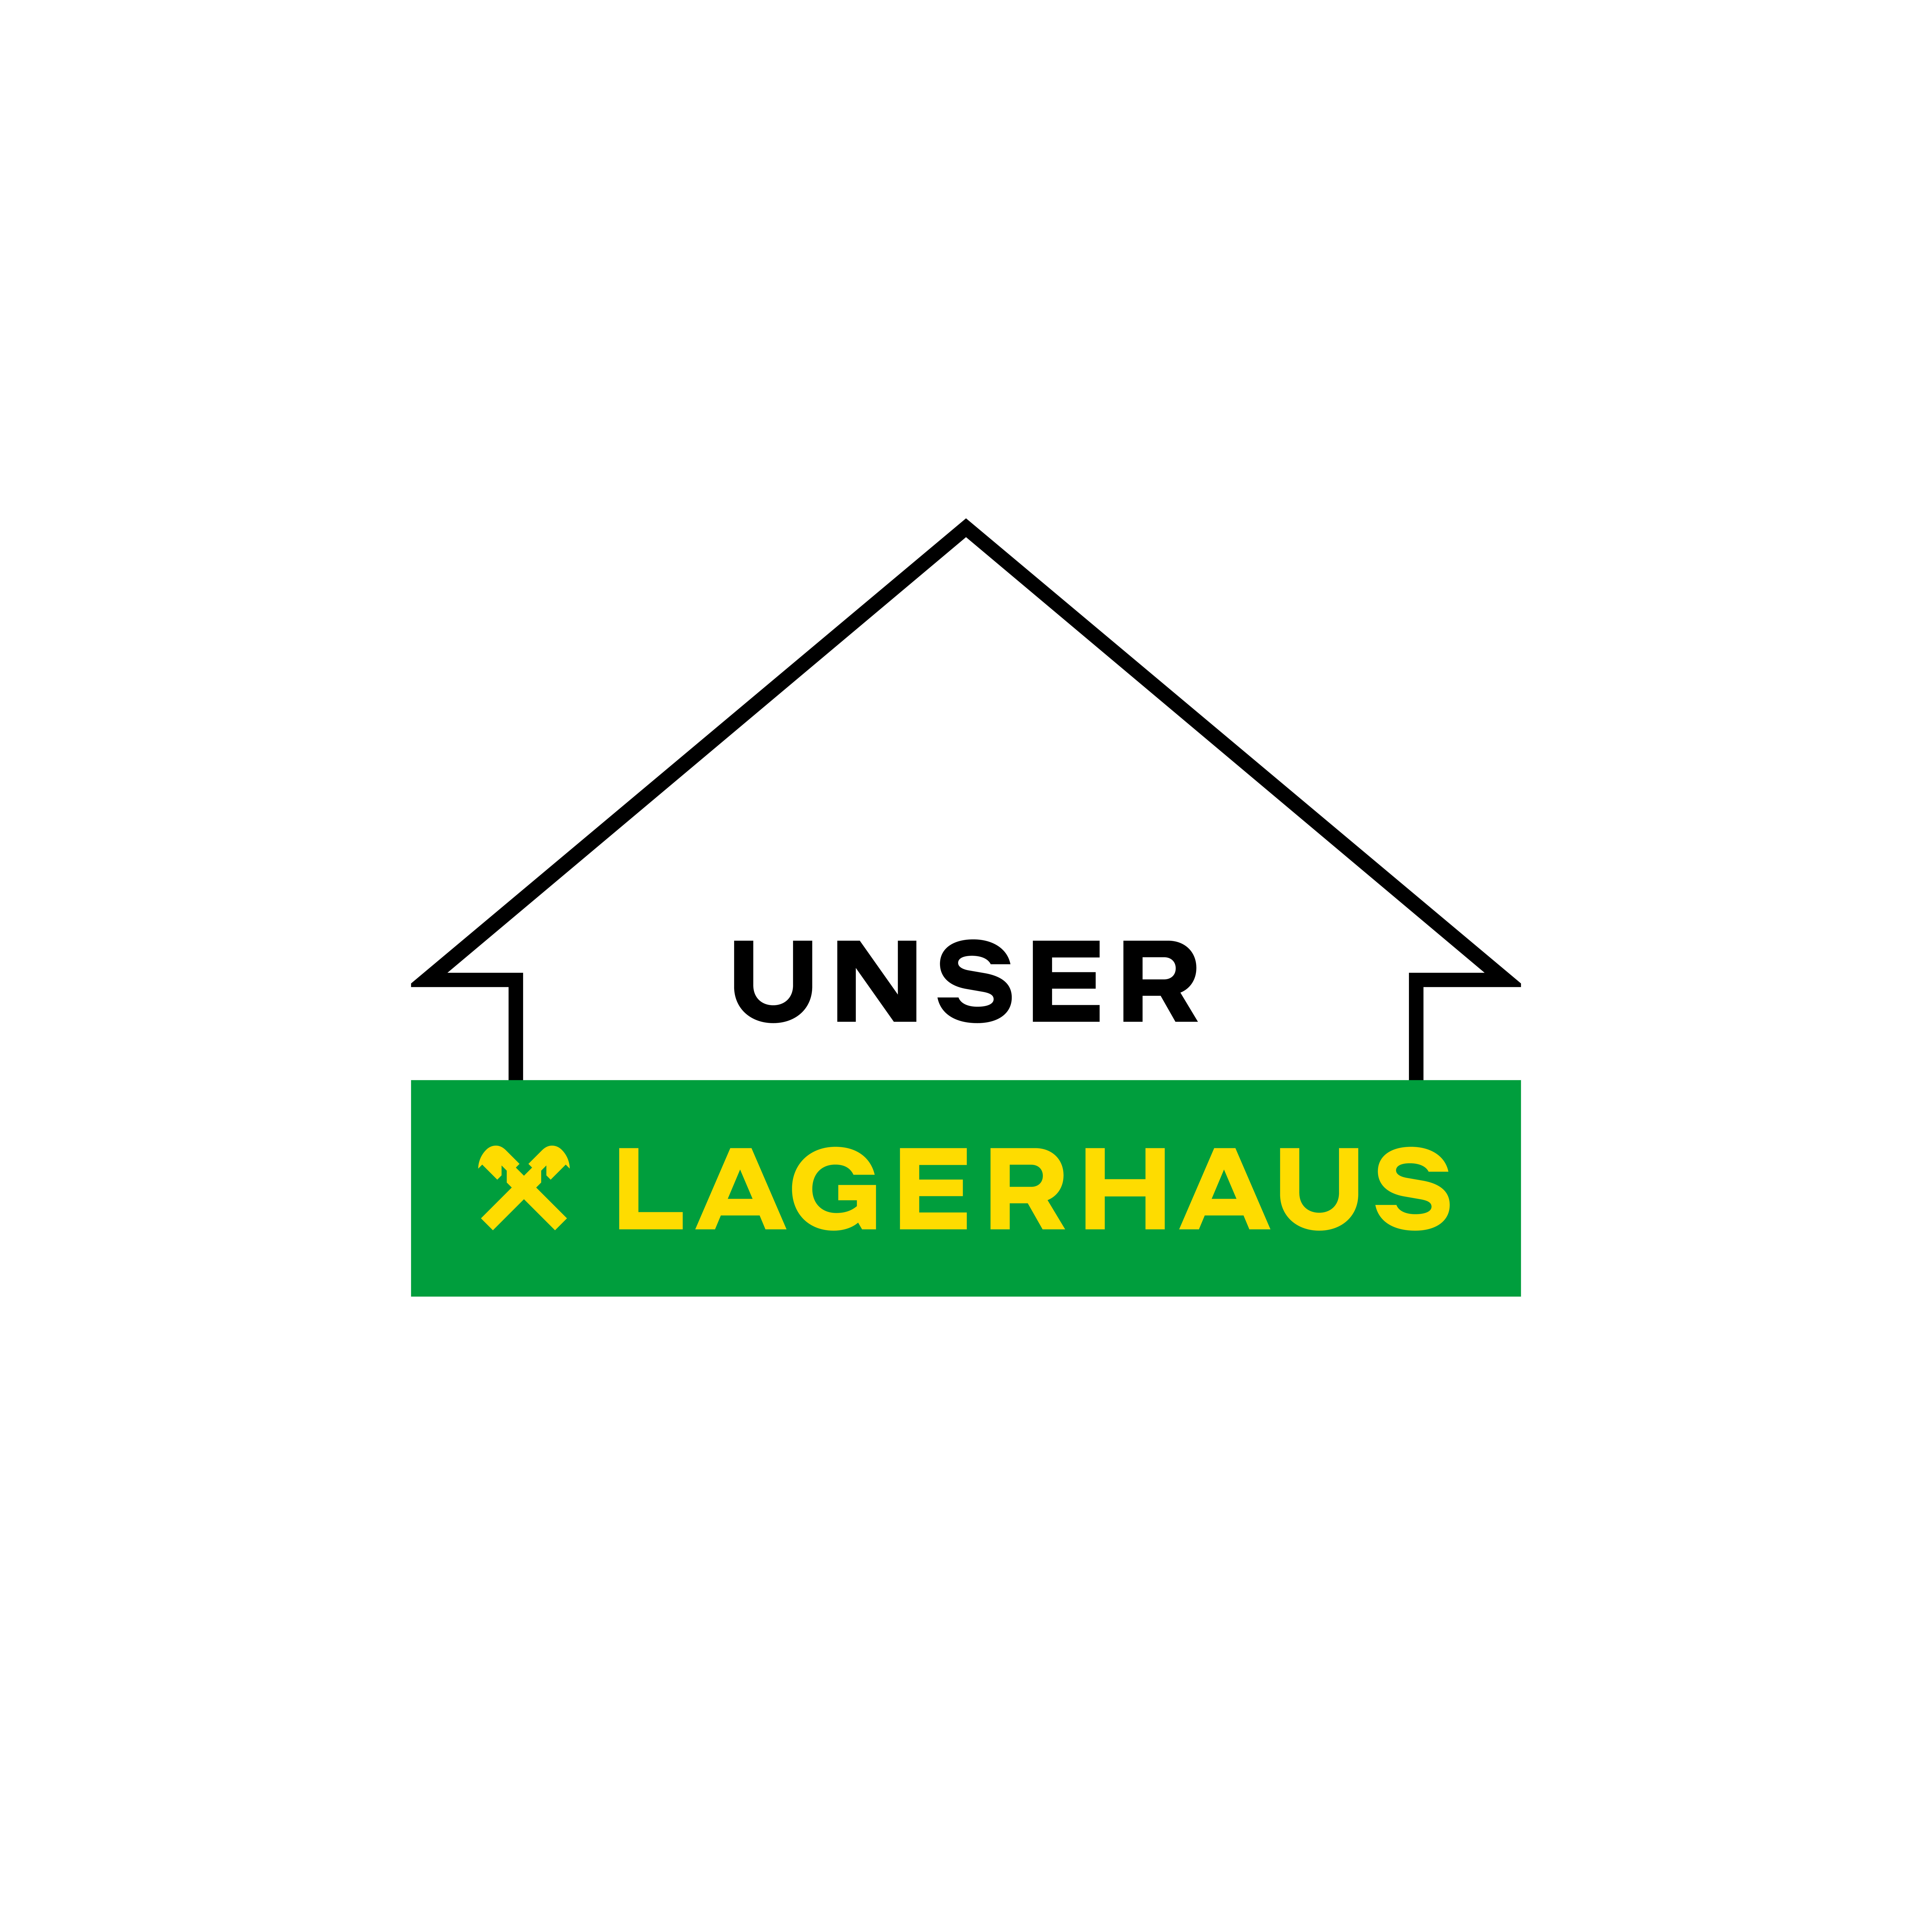 UNSER LAGERHAUS WarenhandelsgesmbH Logo